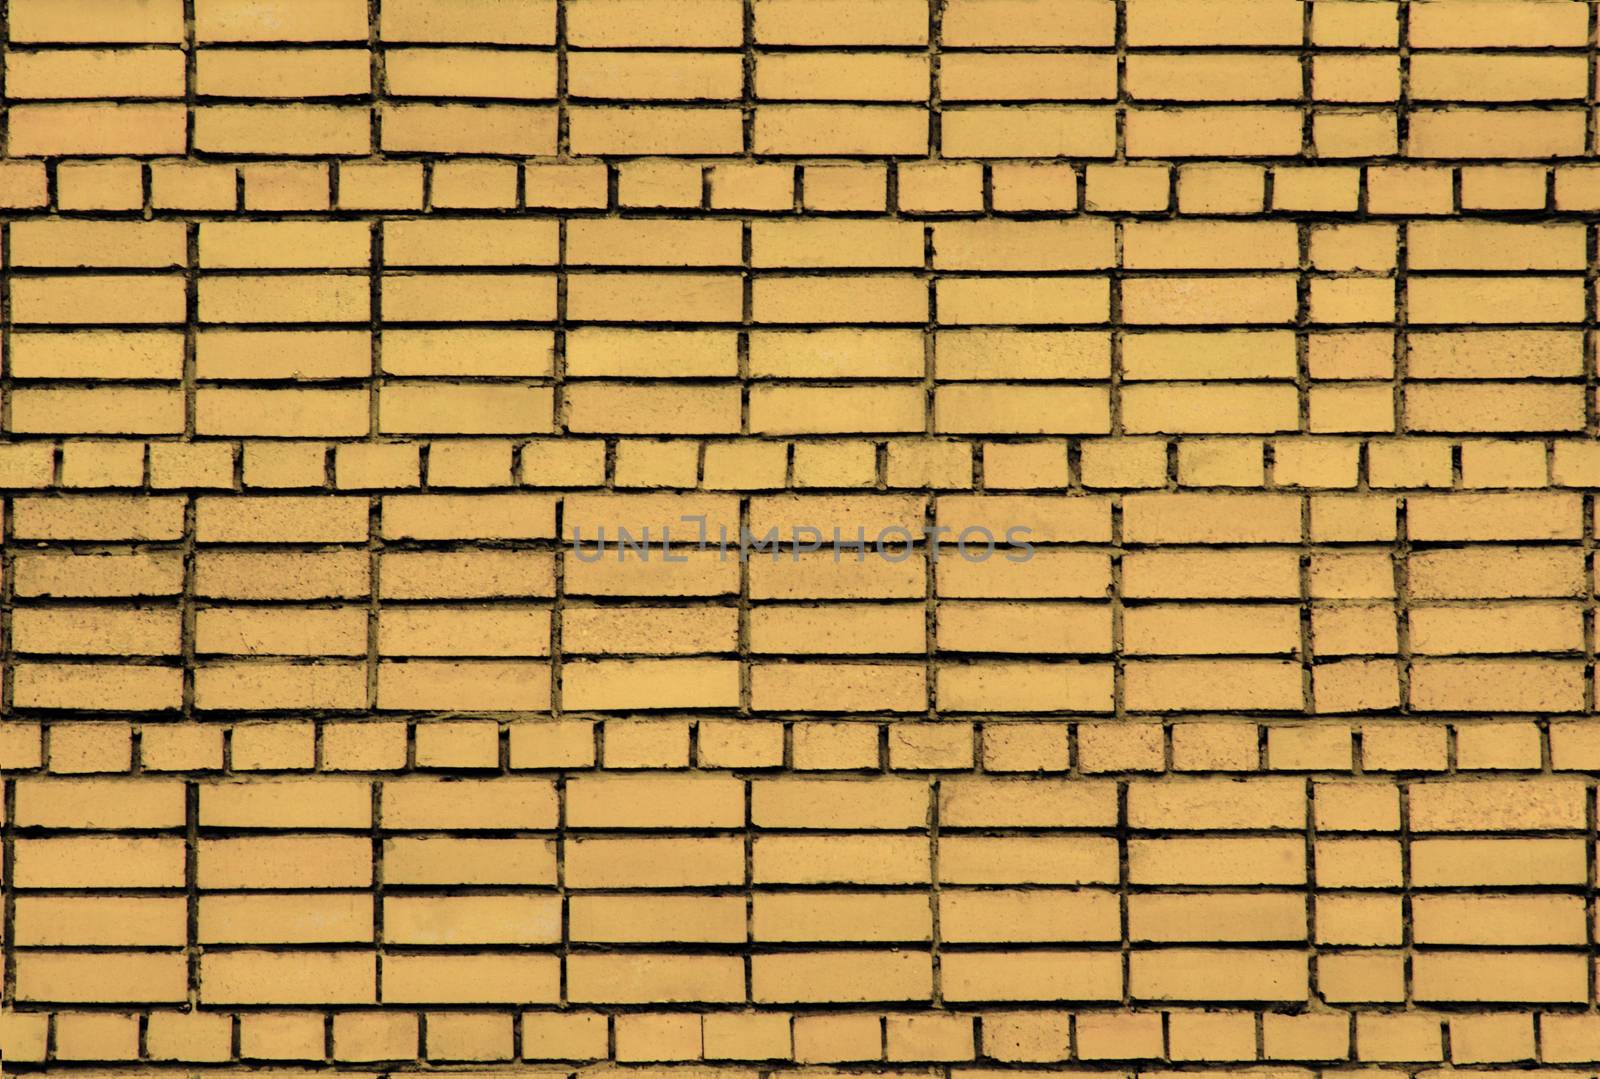 Brickwork of yellow bricks on cement mortar. by Igor2006